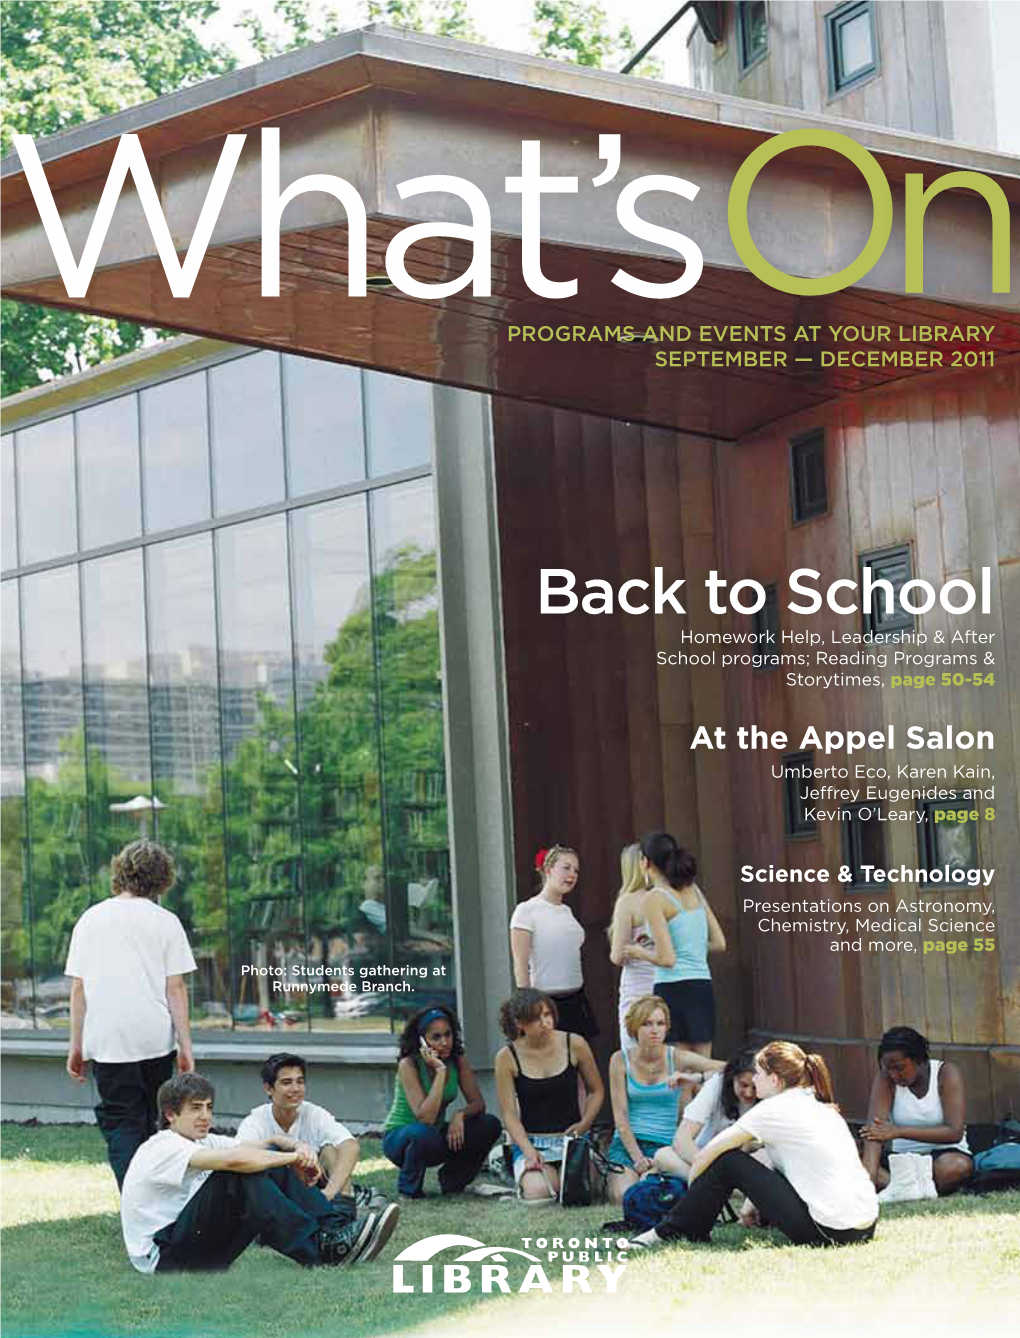 Back to School Homework Help, Leadership & After School Programs; Reading Programs & Storytimes, Page 50-54